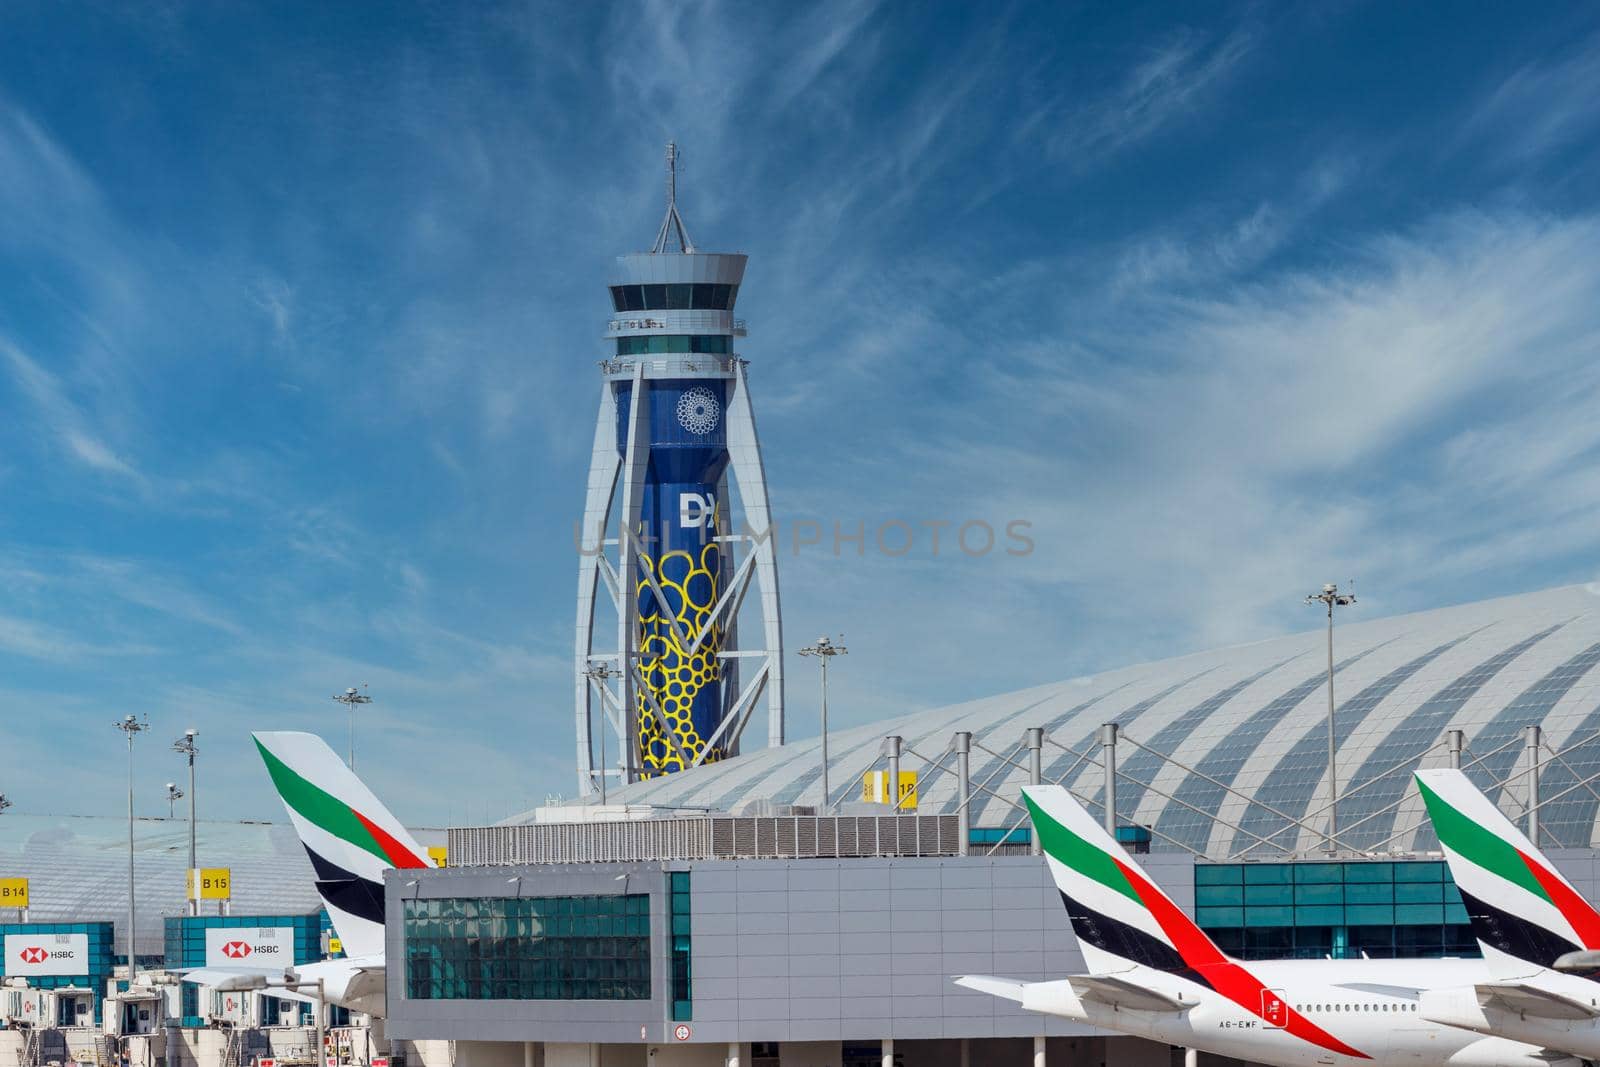 DUBAI, UAE - CIRCA 2021: Emirates Airline Airplanes parked on Dubai Airport, on cloudy sky background. Dubai Airport ATC